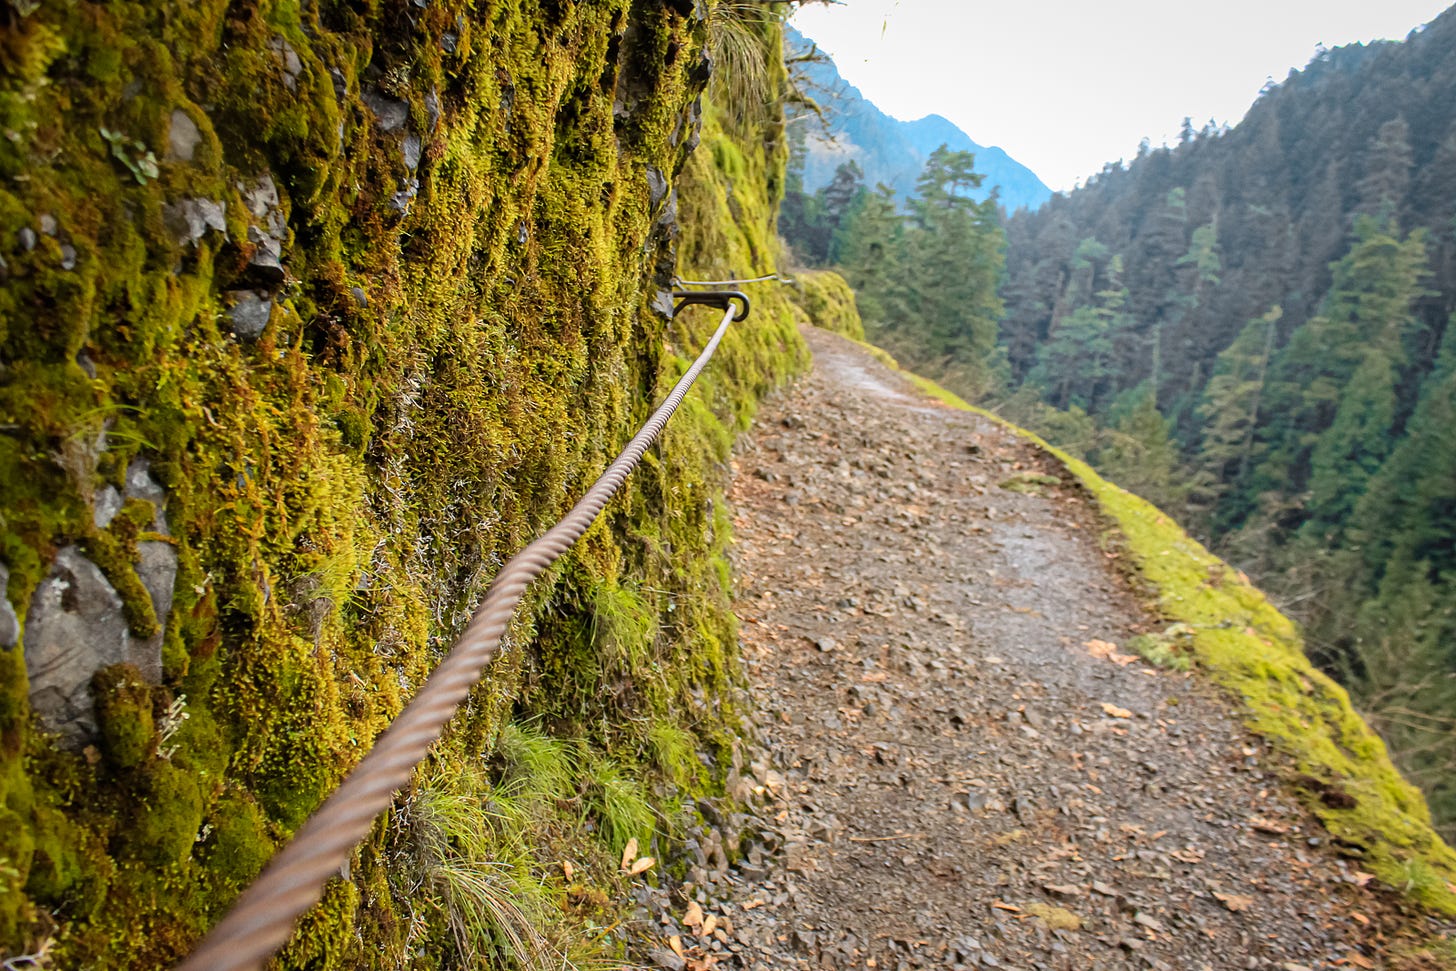 A hiking path along the edge of ravine